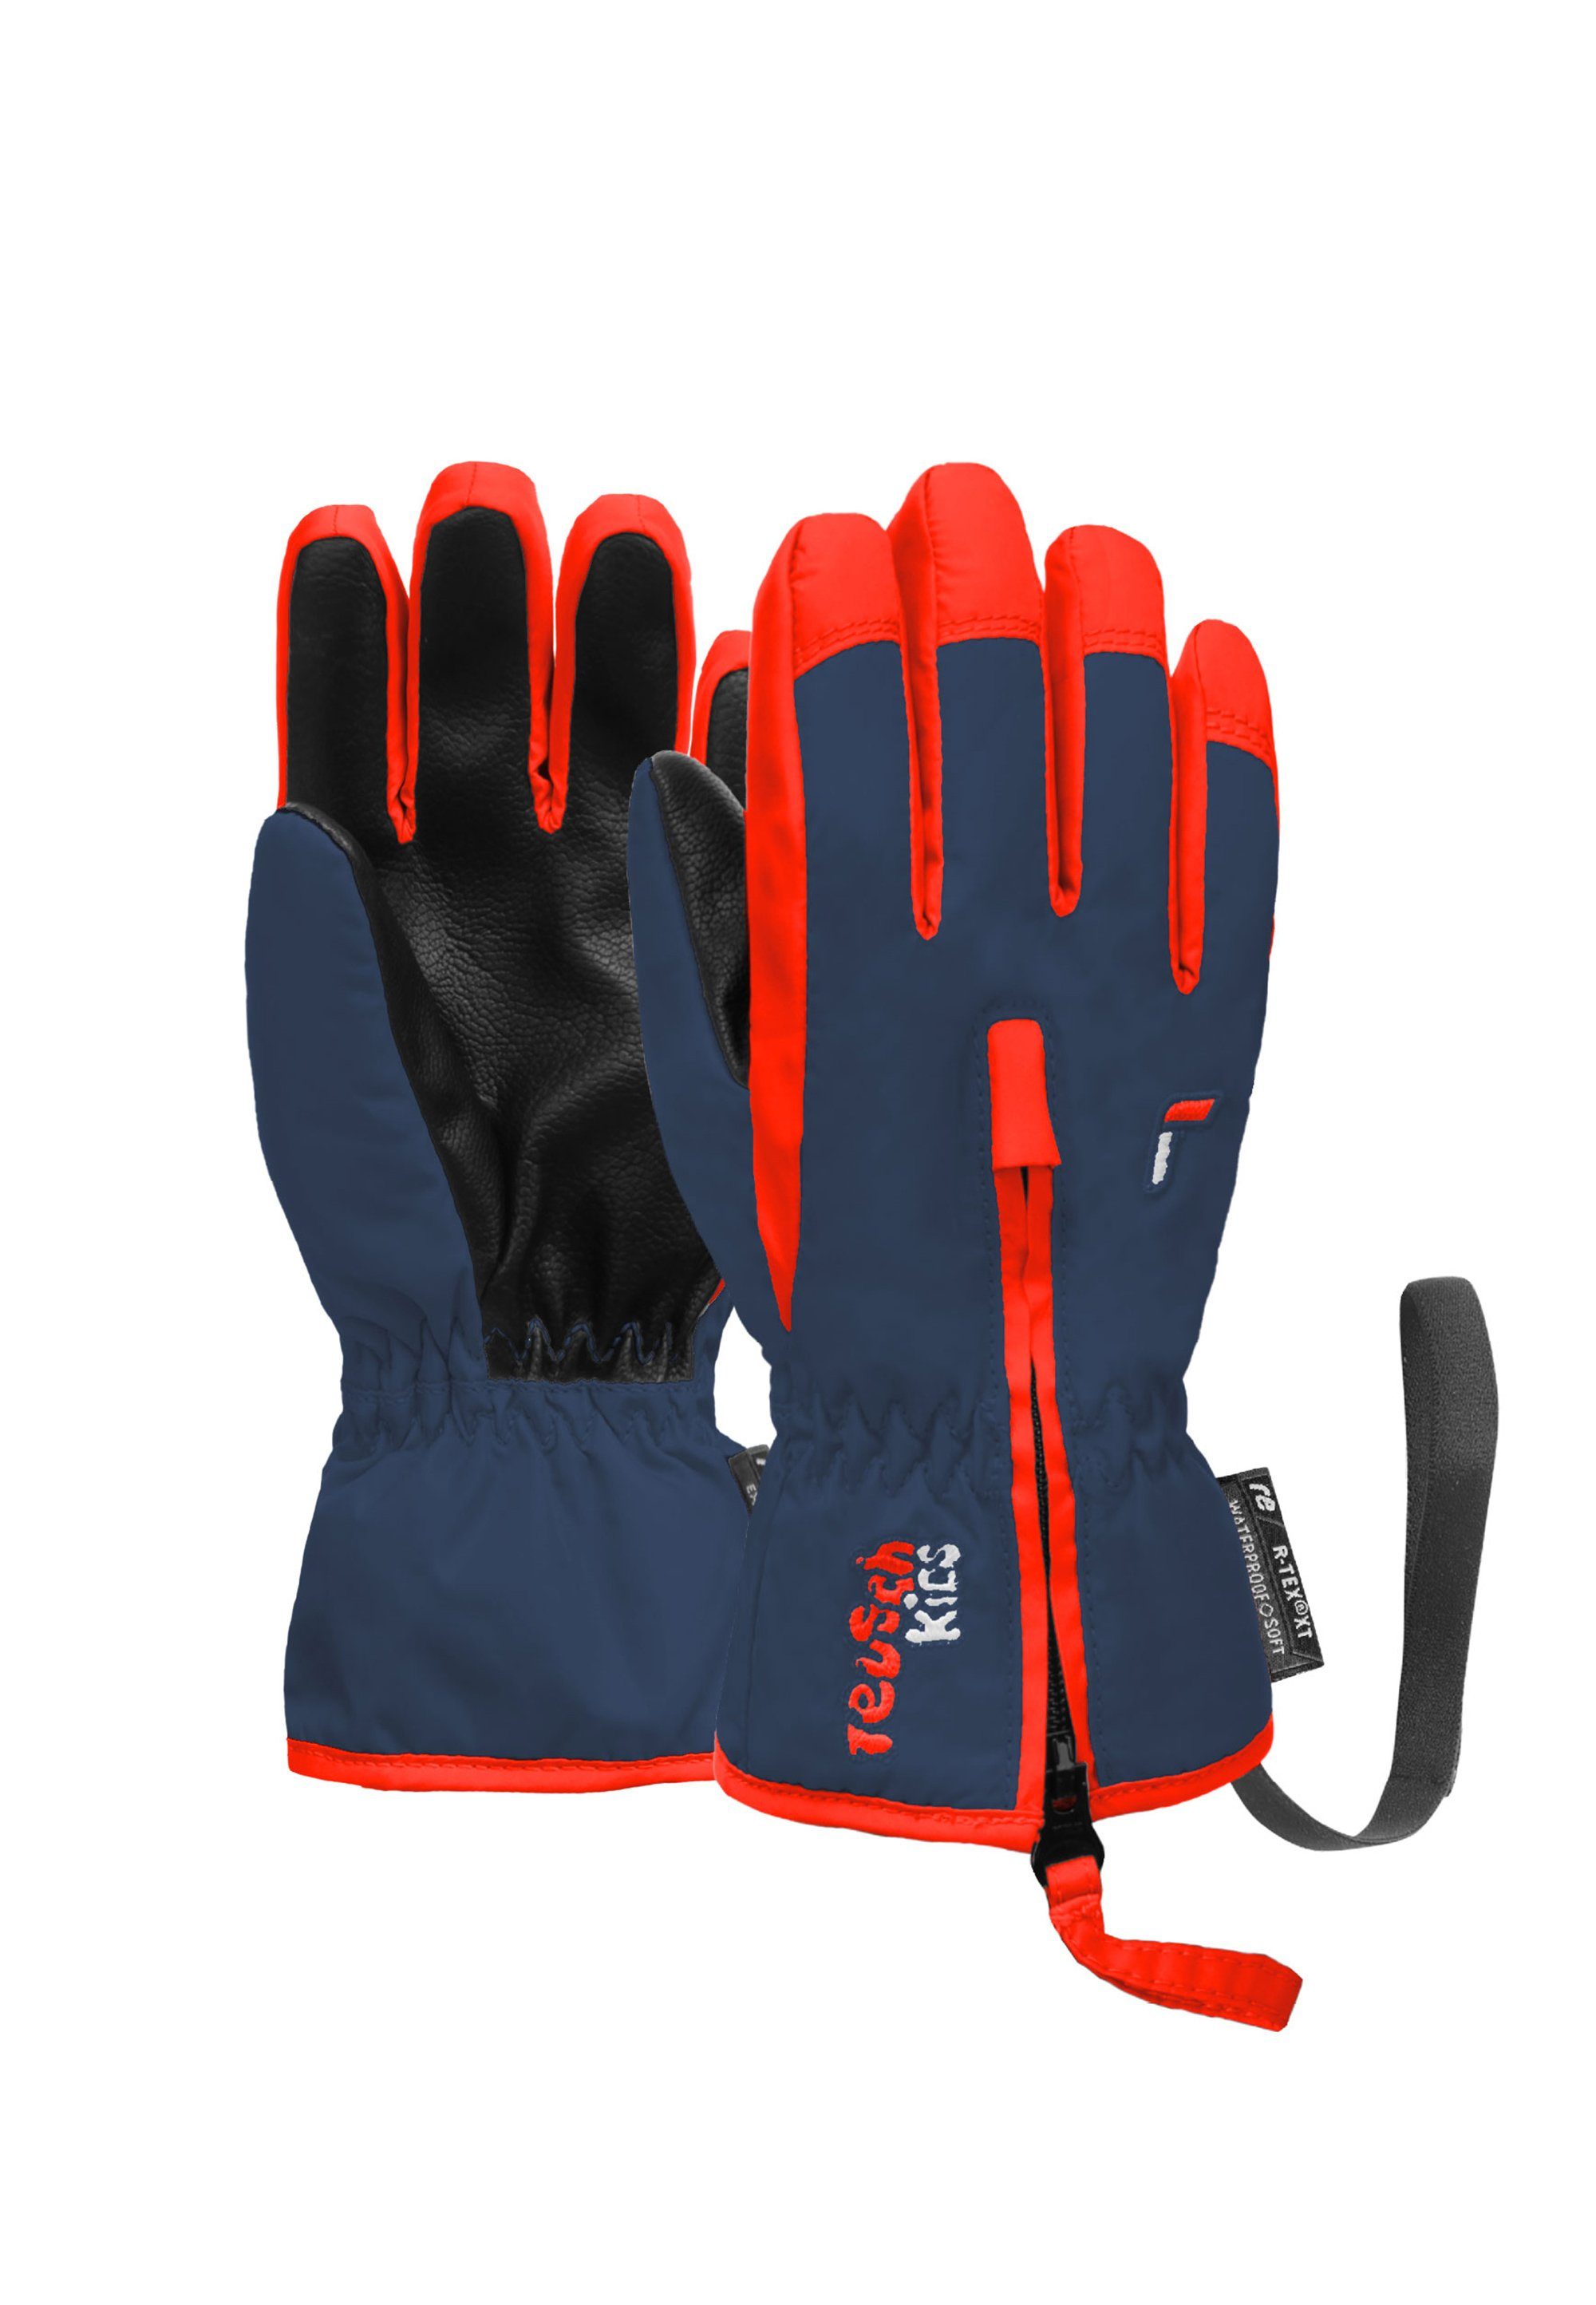 Reusch Skihandschuhe Ben mit praktischer Handgelenkschlaufe rot-blau | Sporthandschuhe